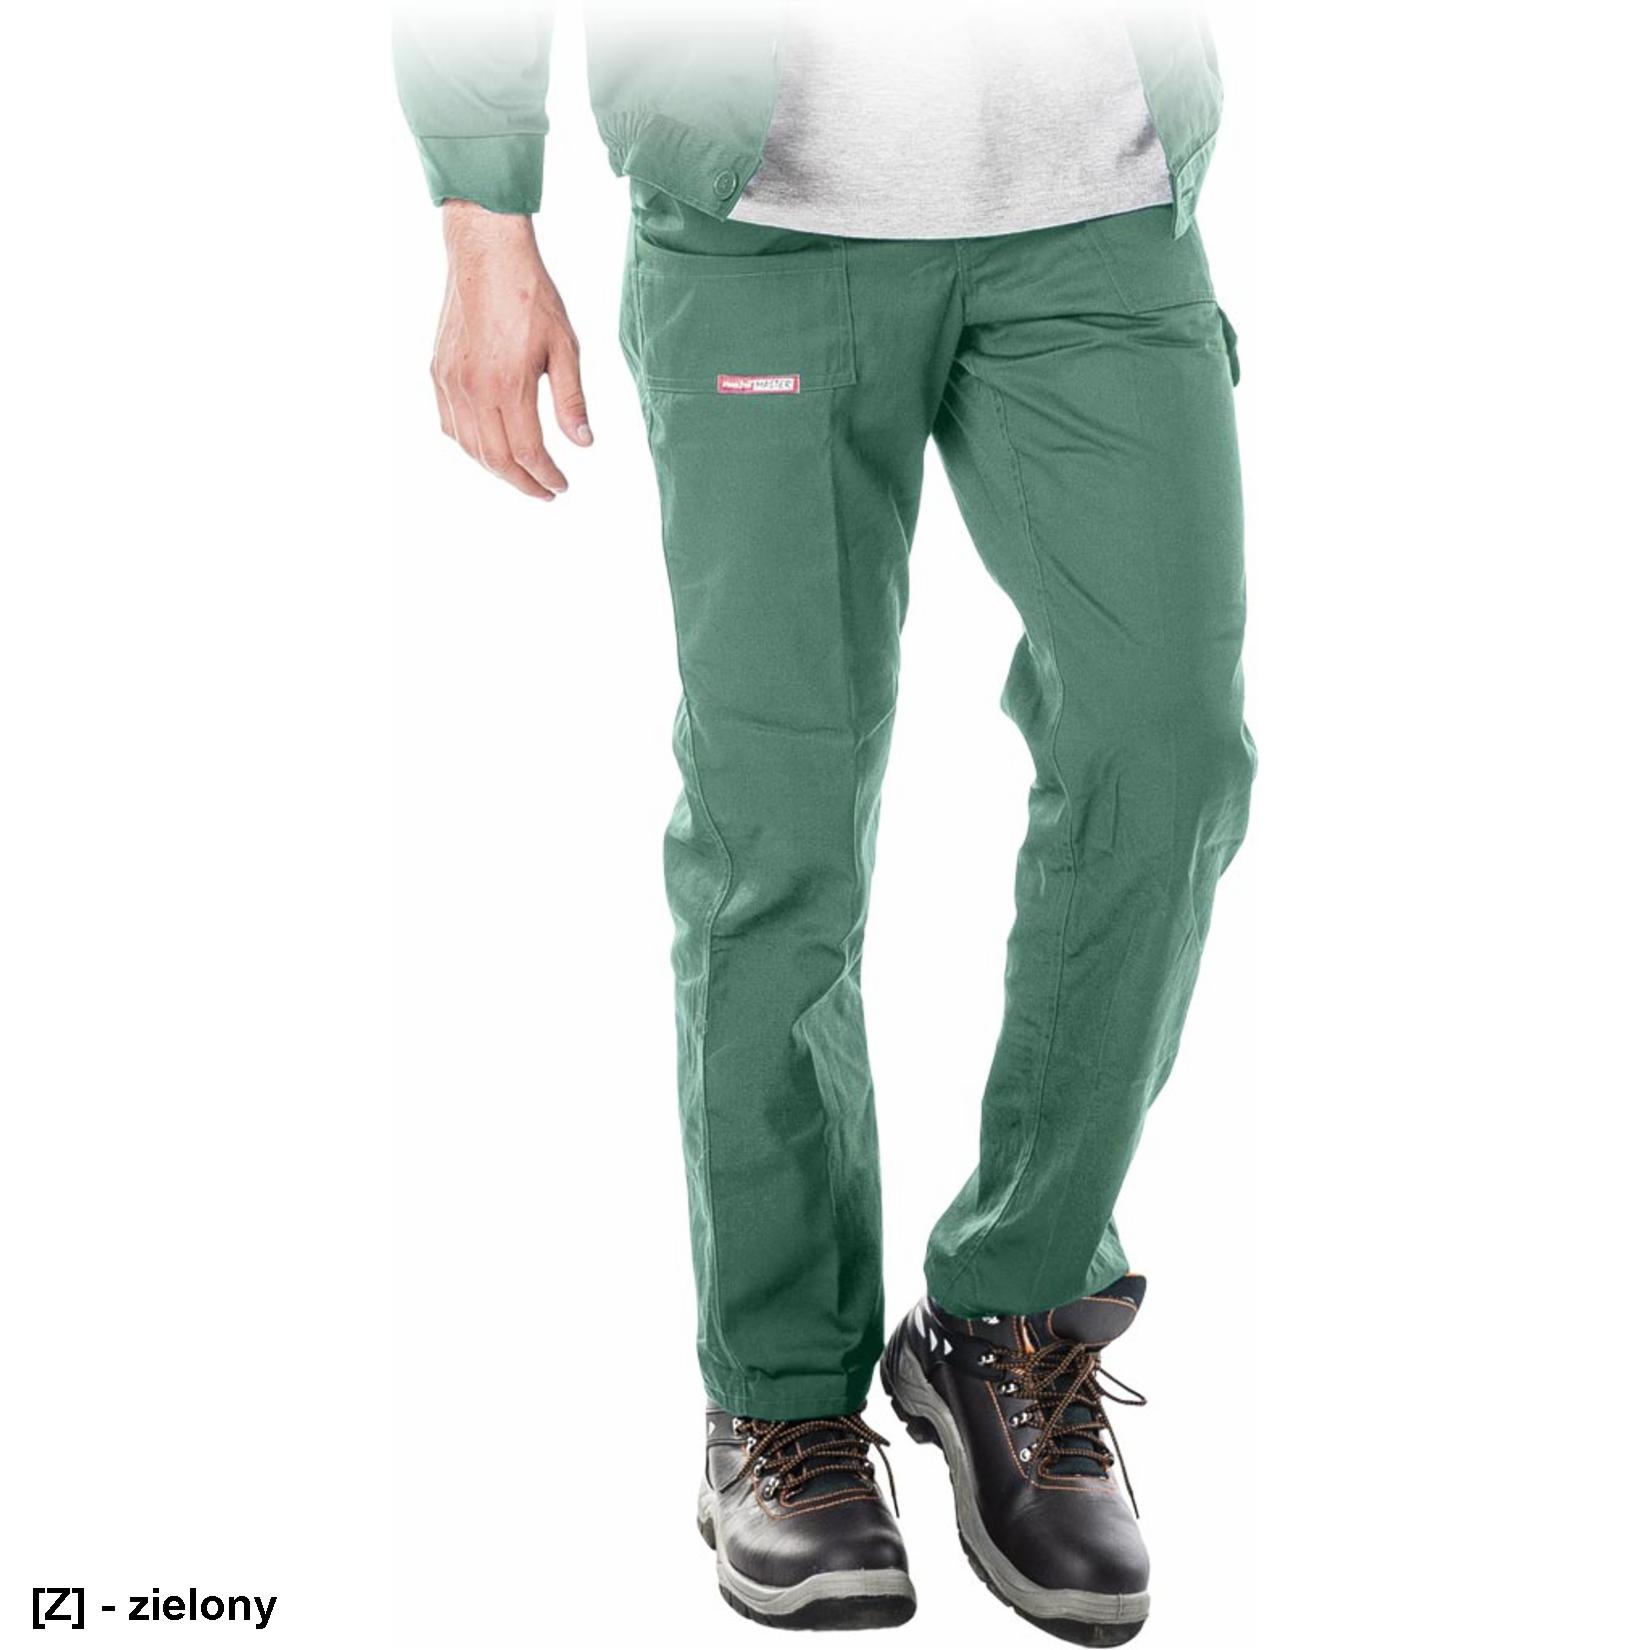 SPM - master spodnie ochronne do pasa - 6 kolorów - 48-62.